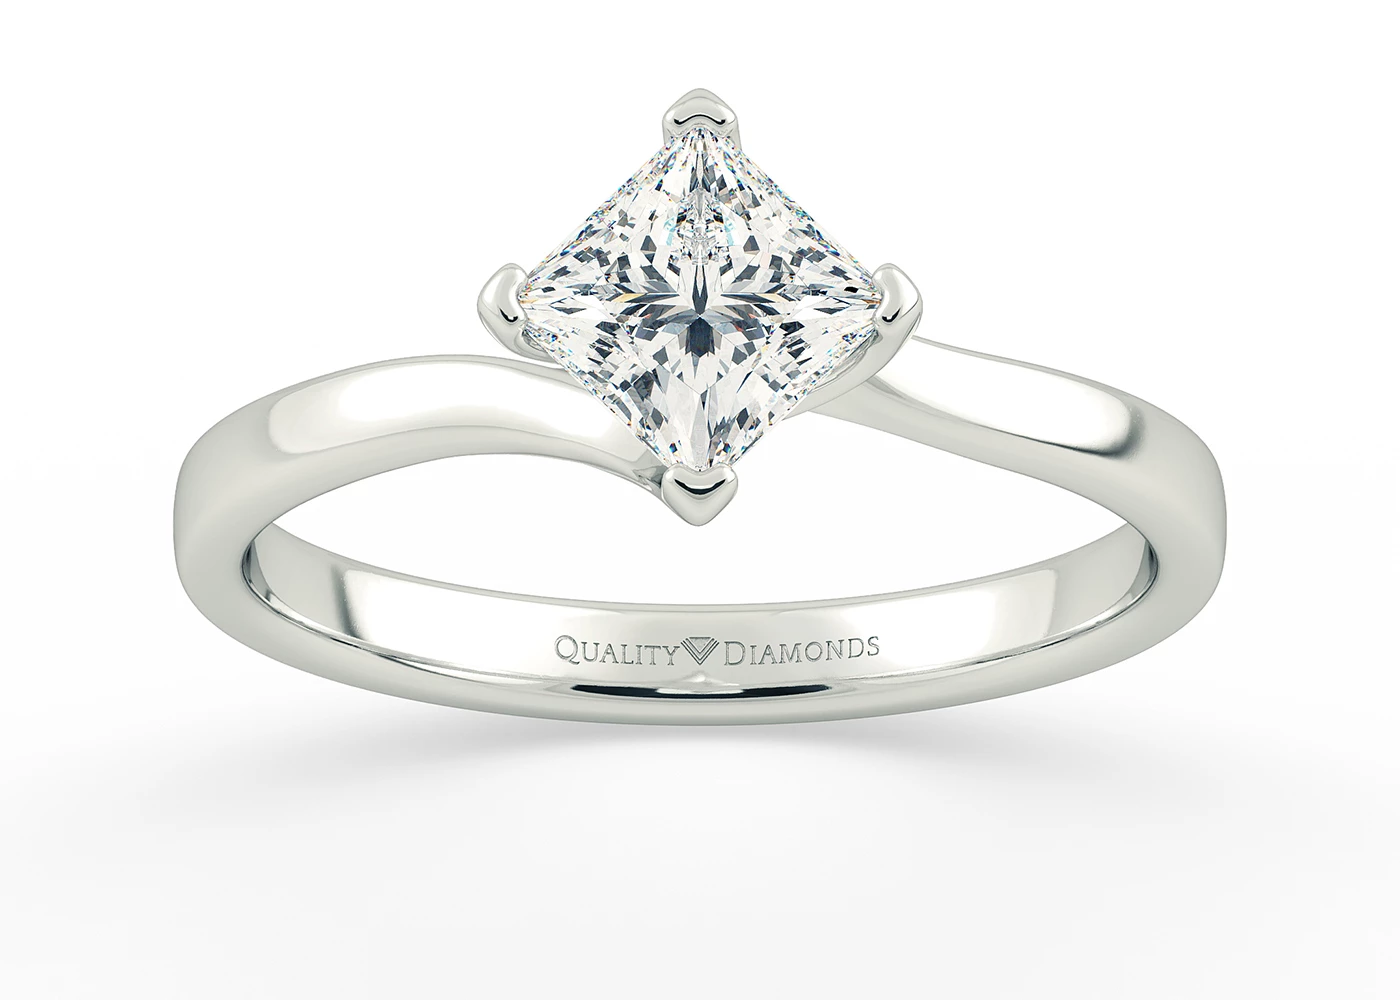 Princess Cura Diamond Ring in Palladium